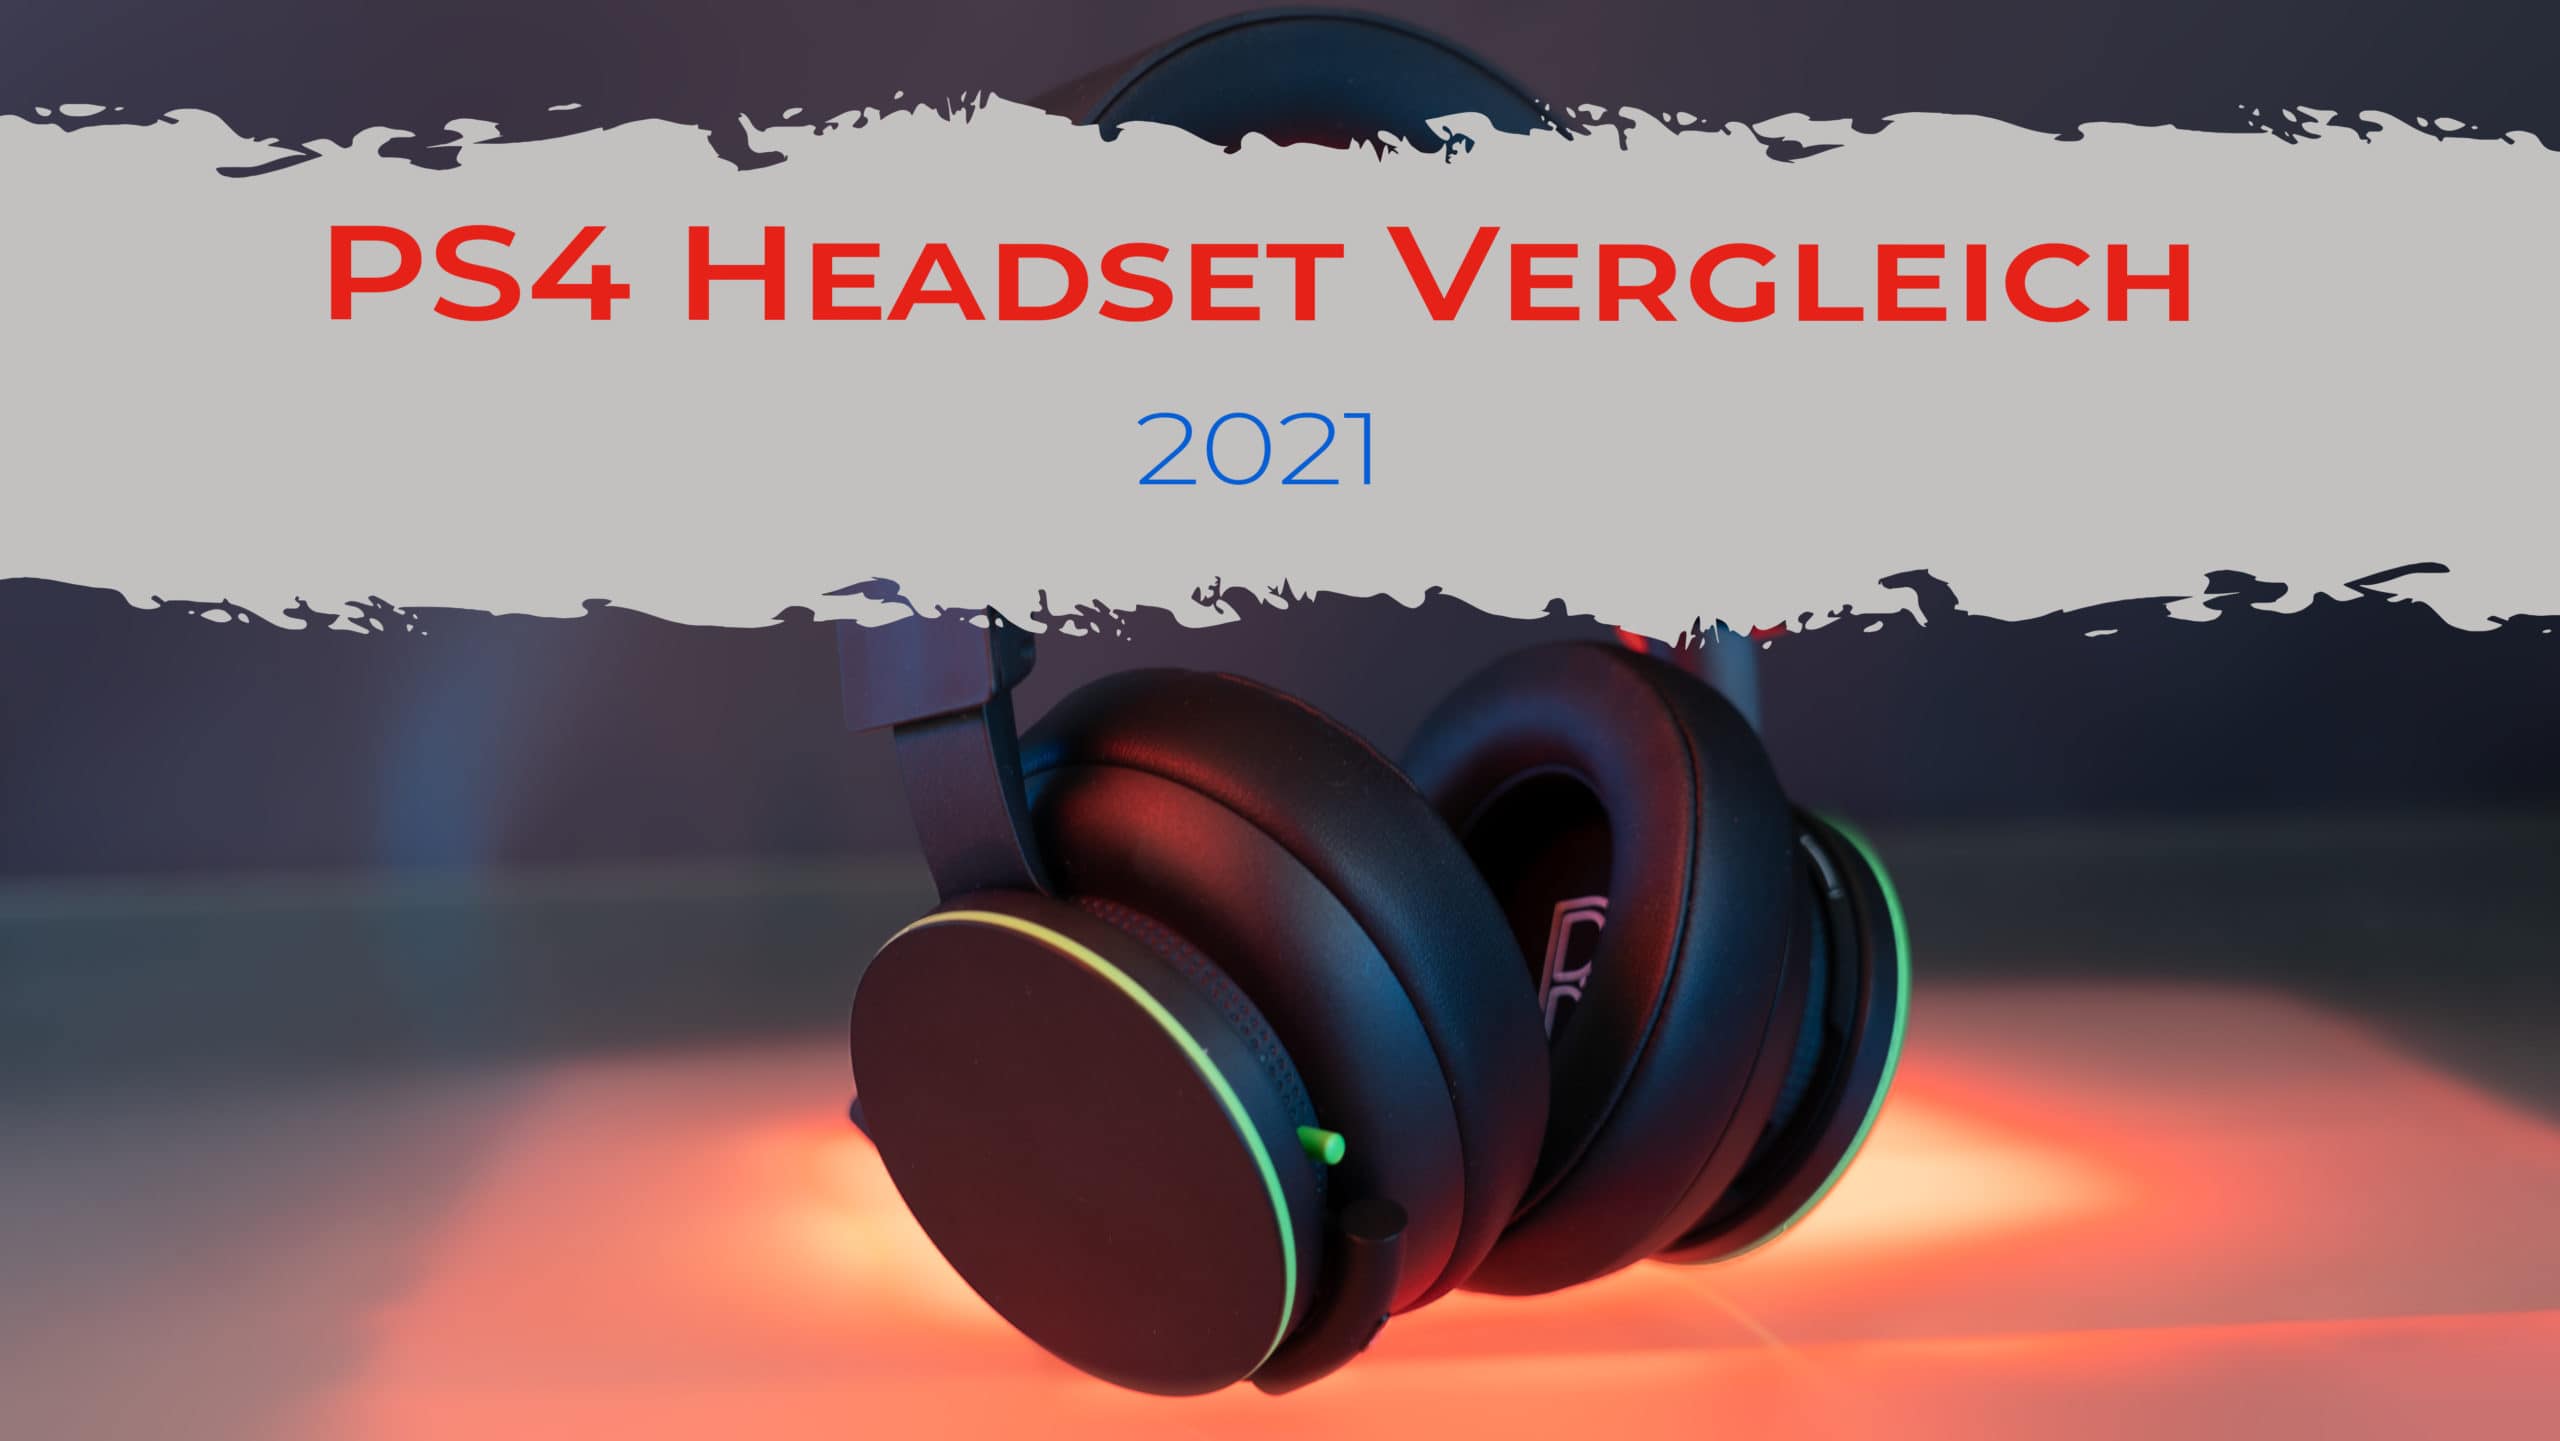 PS4 Headset Vergleich | 2021